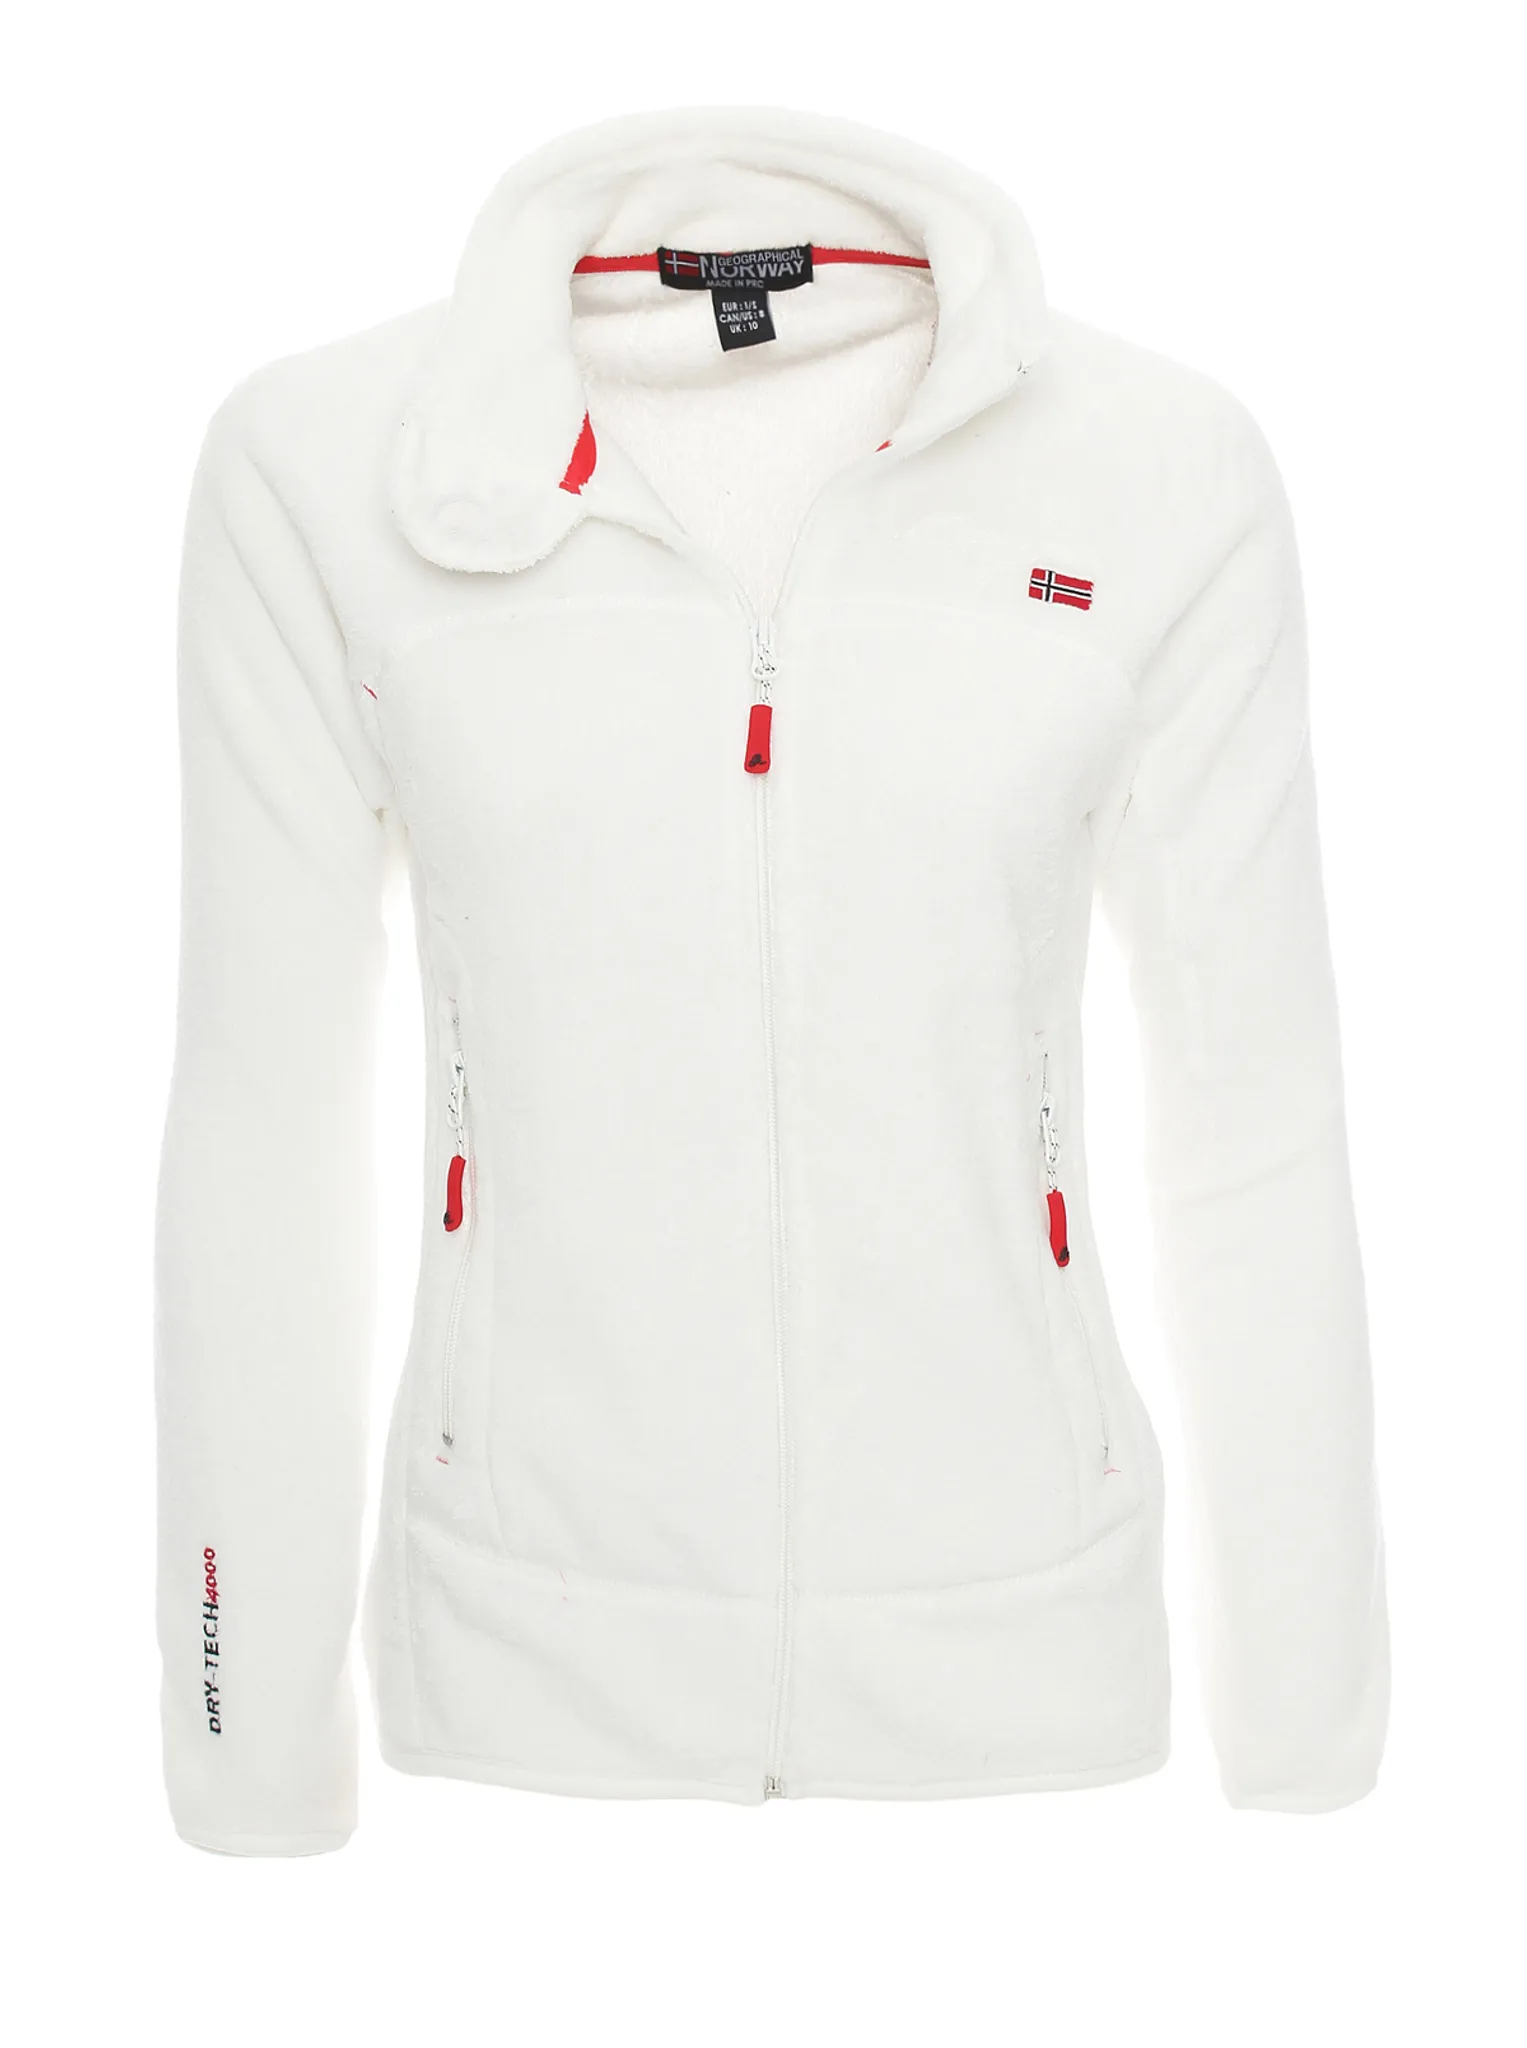 Freizeit Ski Norway Sweater warme Outdoor Sport Geographical Model Fleece Damen flauschige Jacke